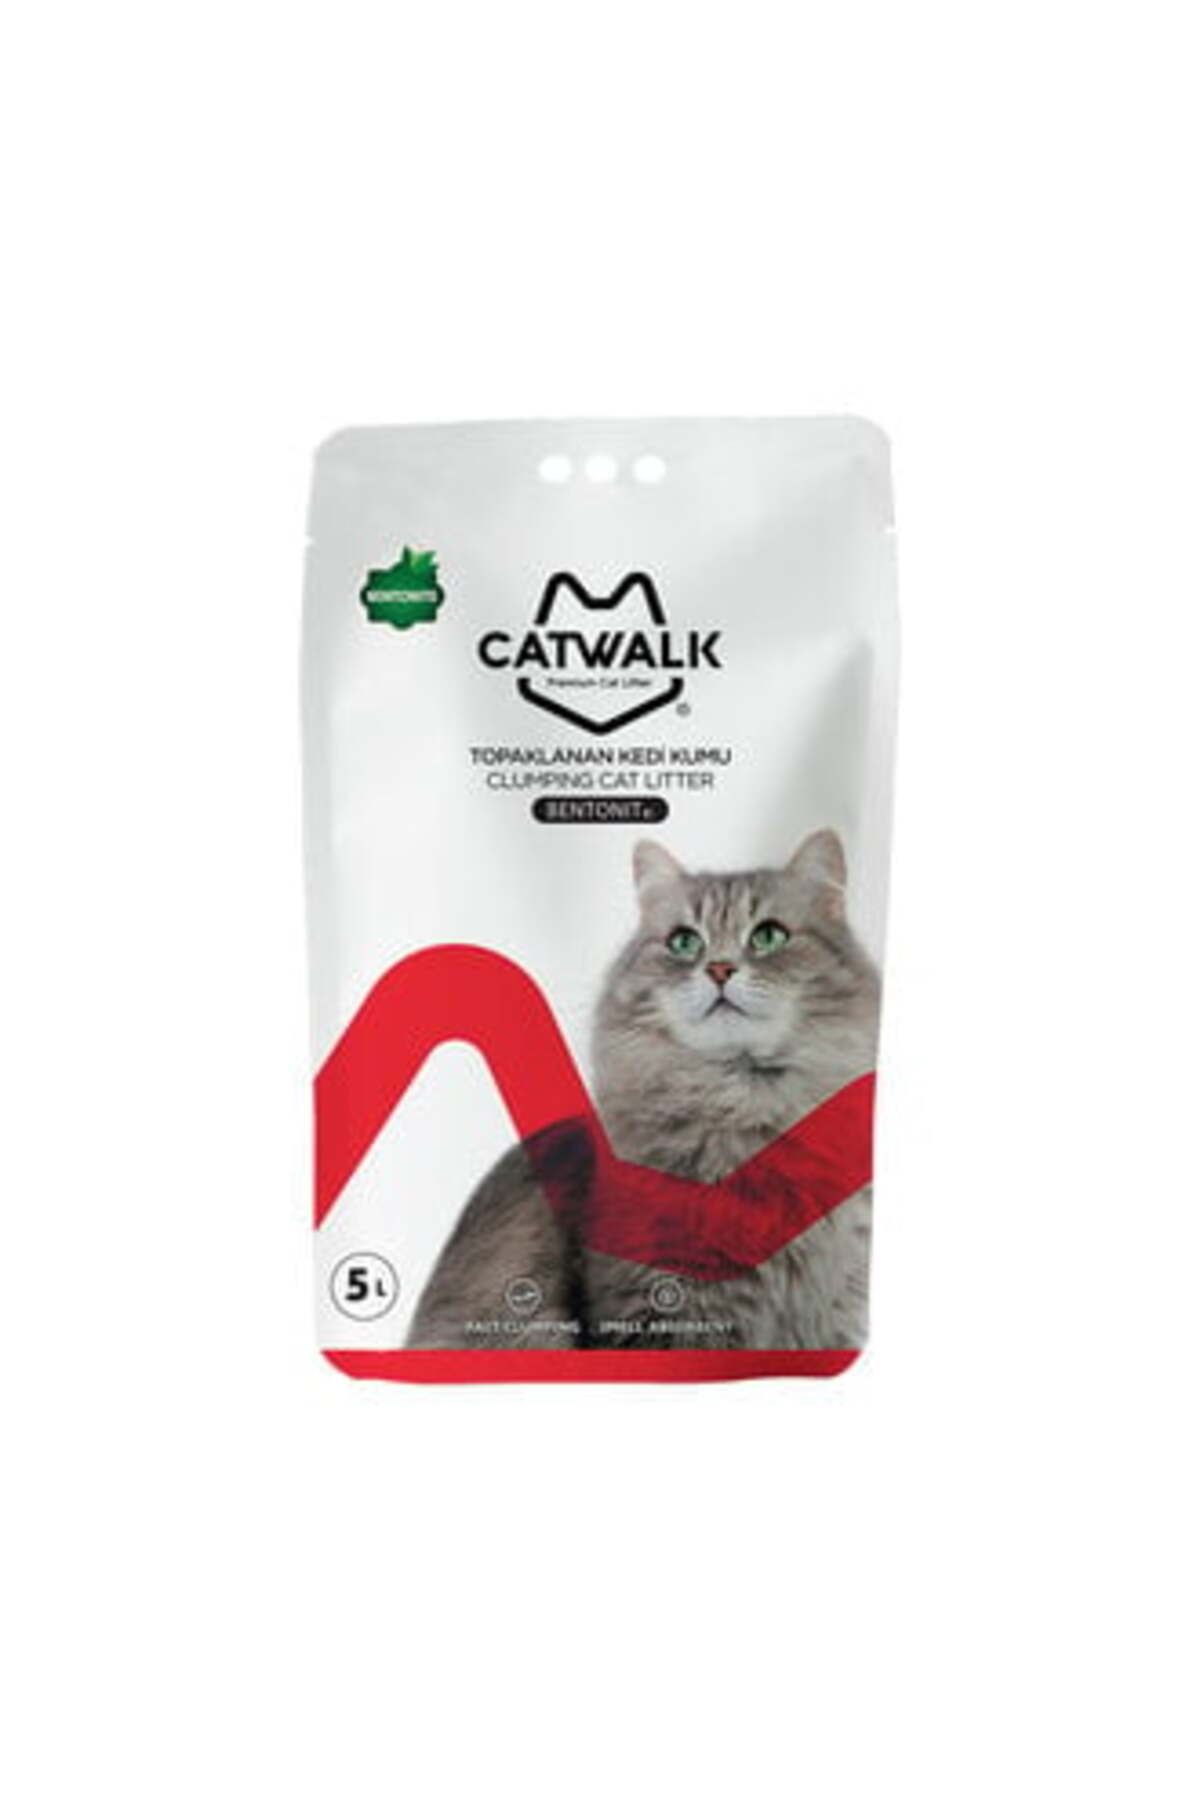 Catwalk Premium Cat Litter Kedi Kumu 5 L ( 1 ADET )